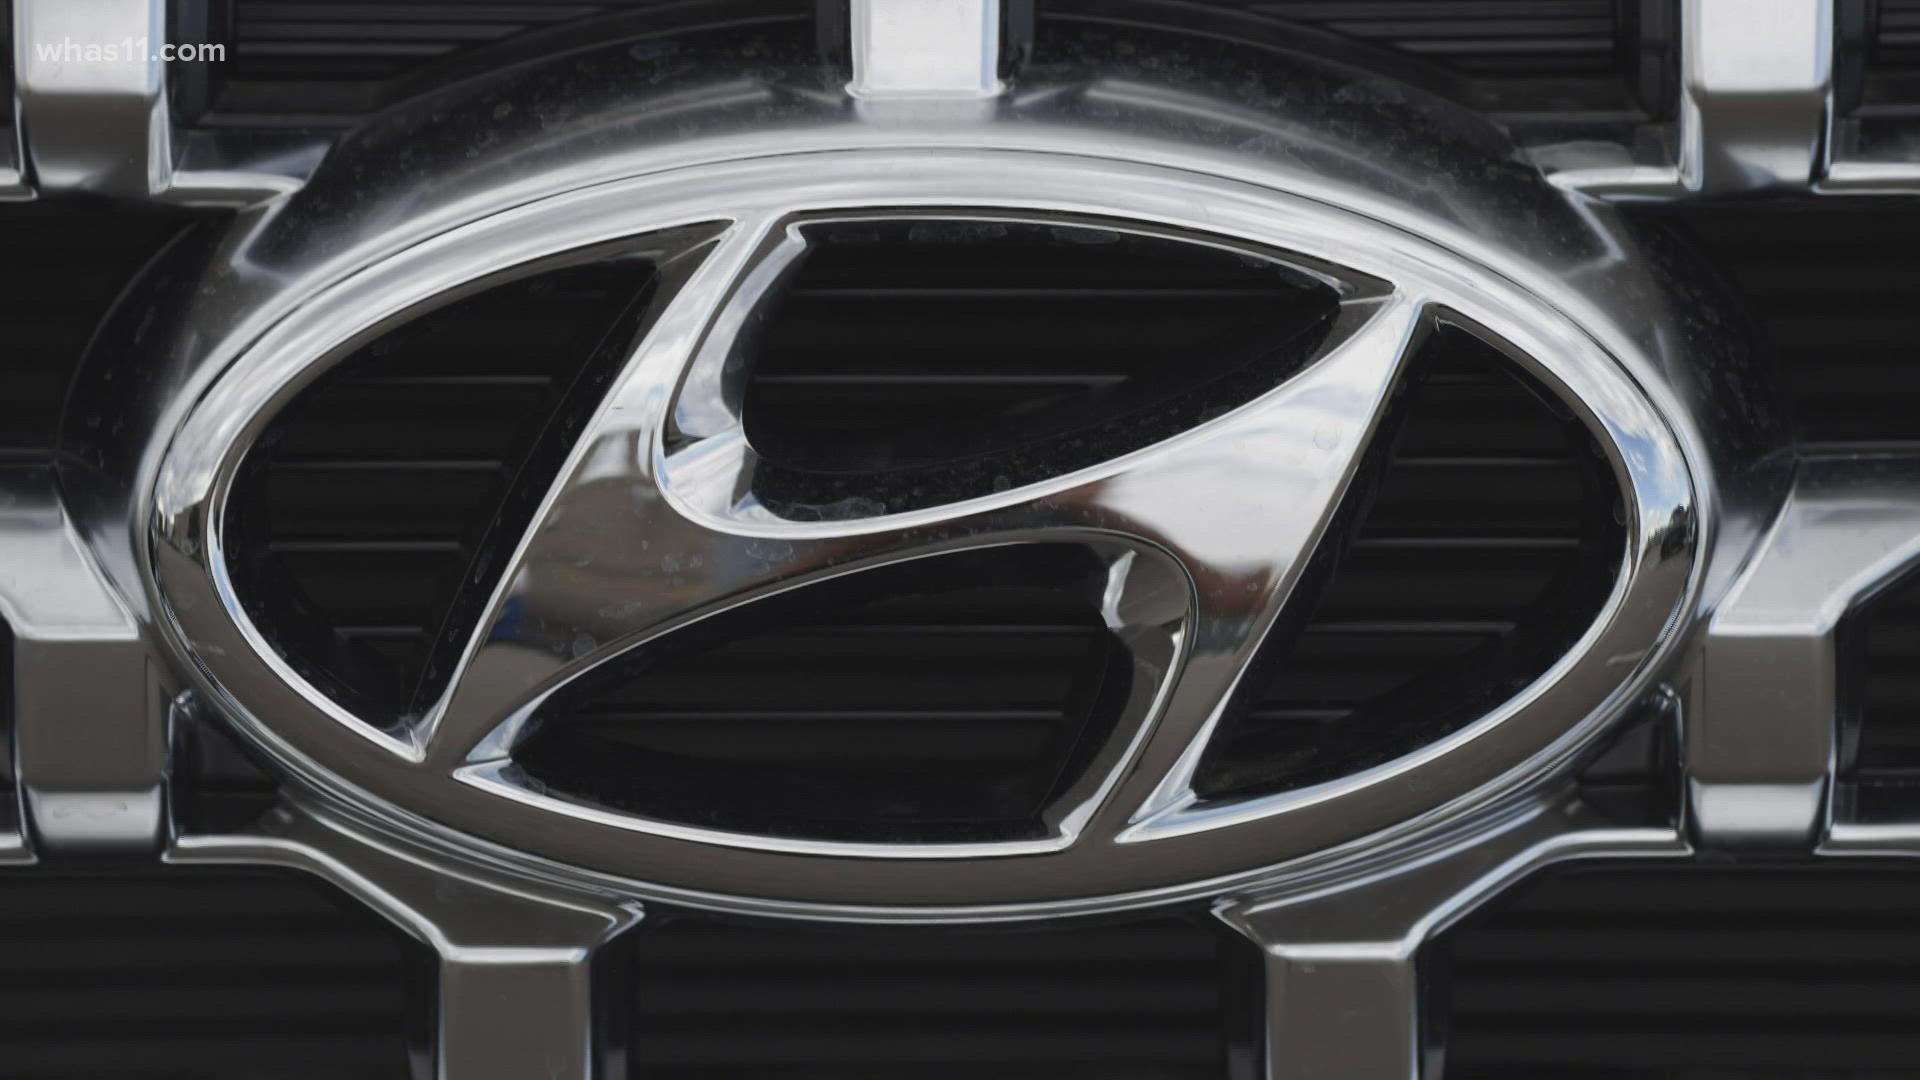 All Hyundai Sonatas and Kia Sedonas from 2015-2017 are being recalled because software may misinterpret turn signals.